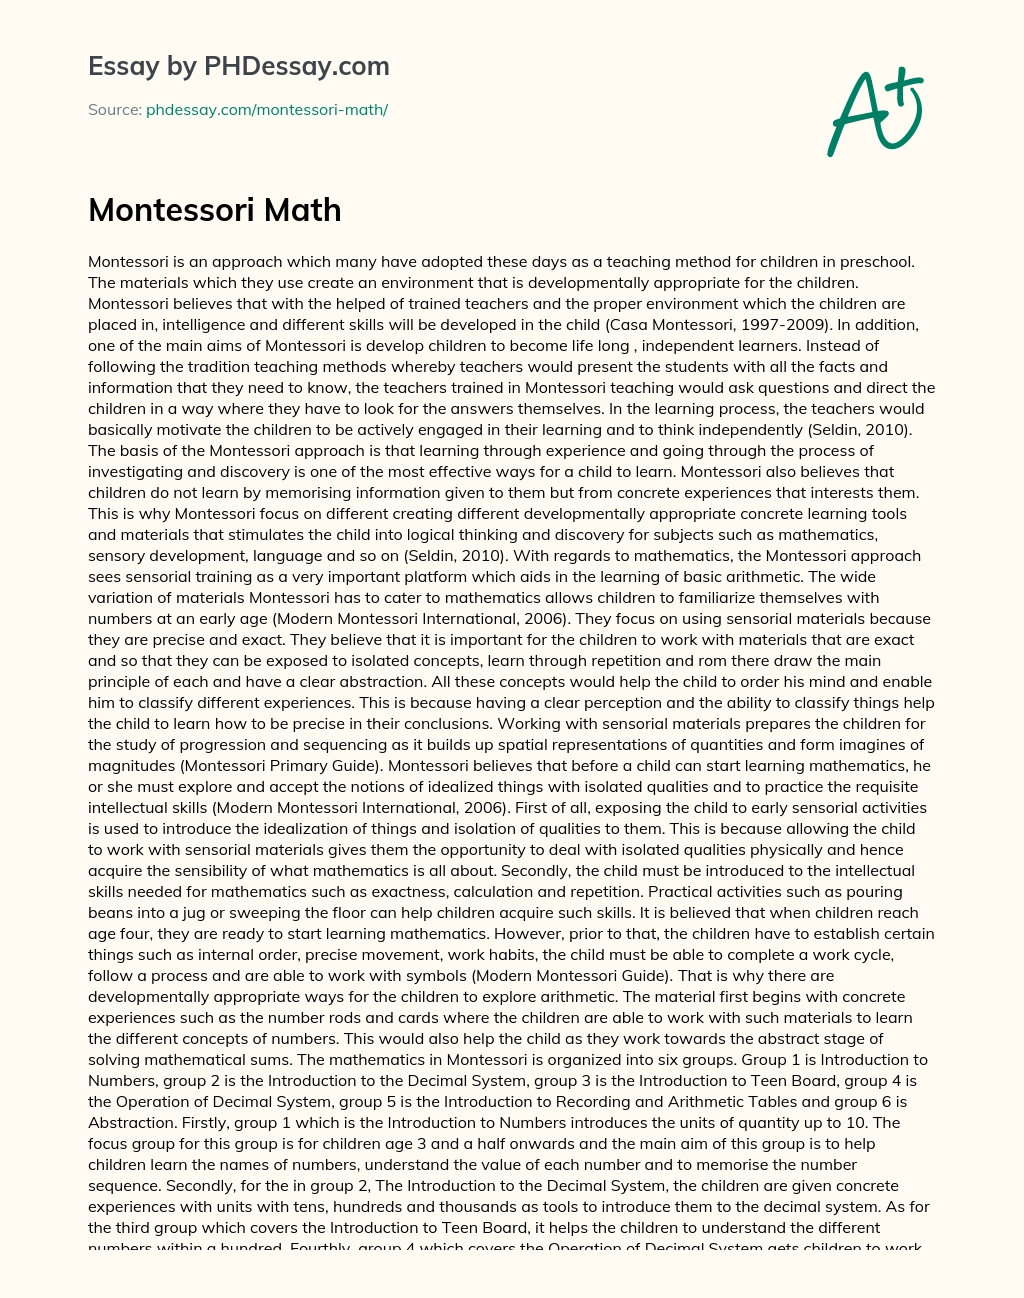 Montessori Math essay